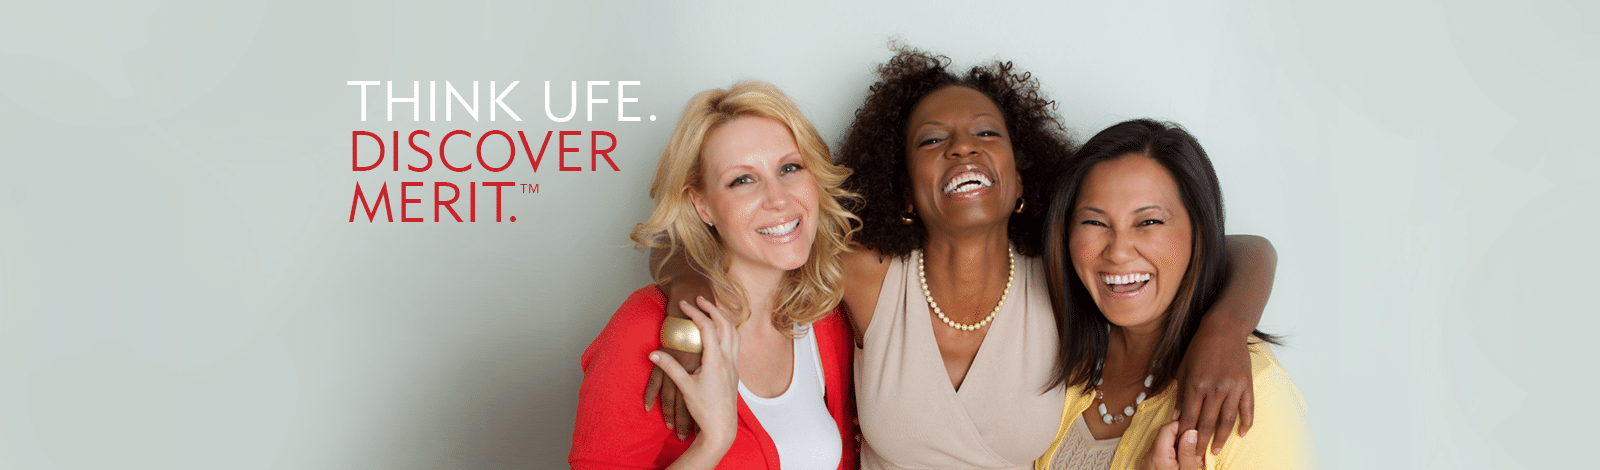 Uterine Fibroid Embolization - 3 Smiling Women on a blank background